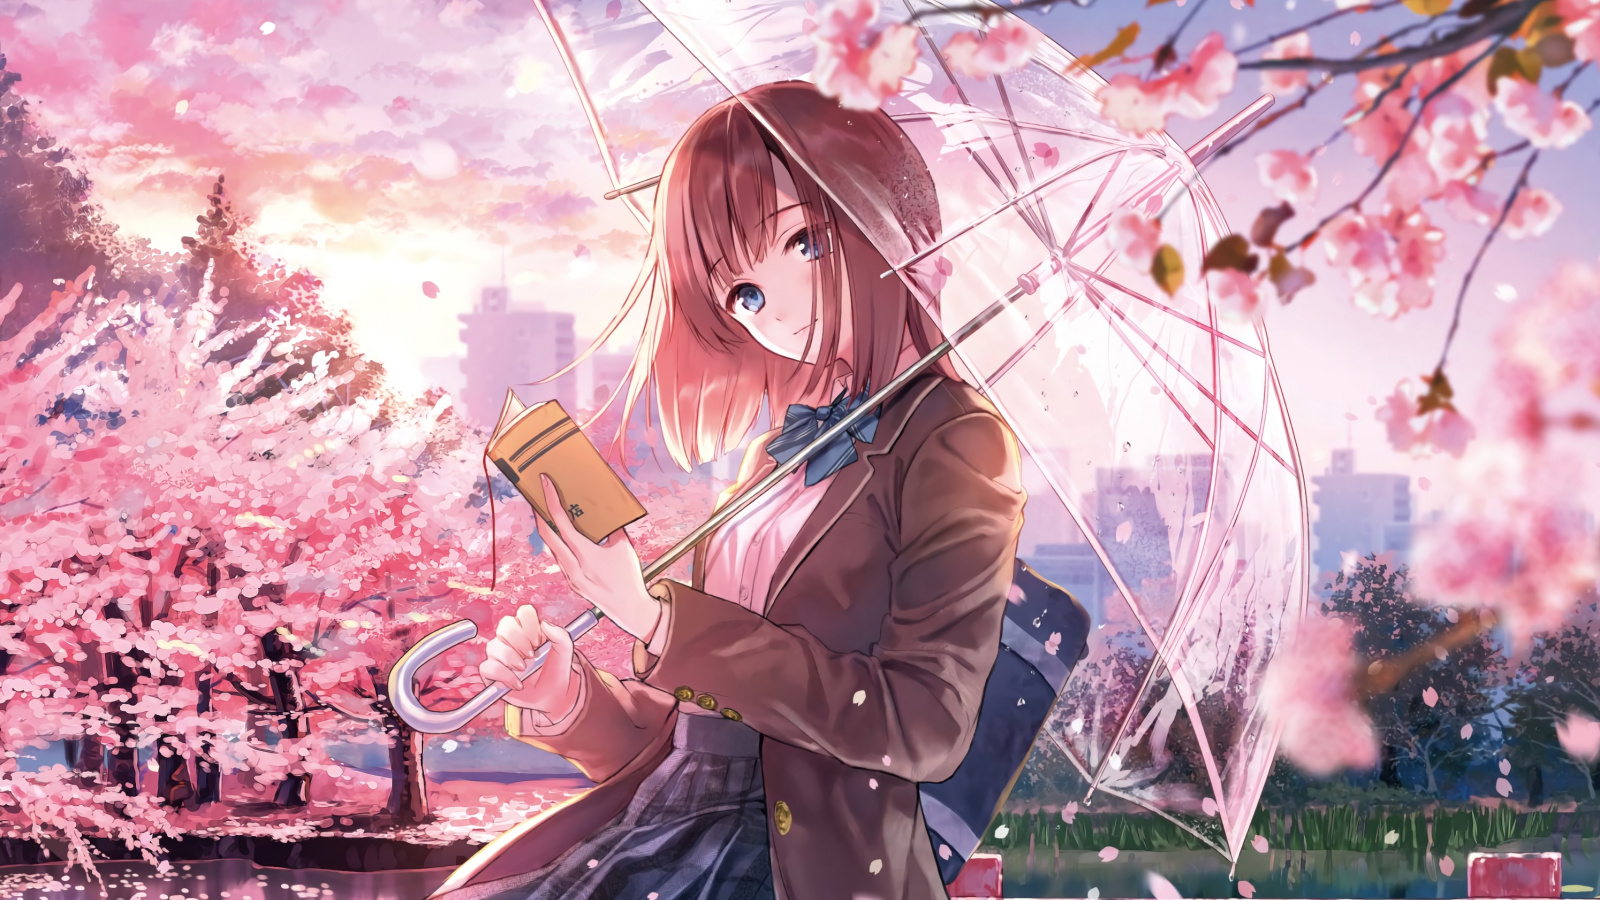 Download Blossom, anime girl, beautiful wallpaper, 1600x Widescreen 16: Widescreen